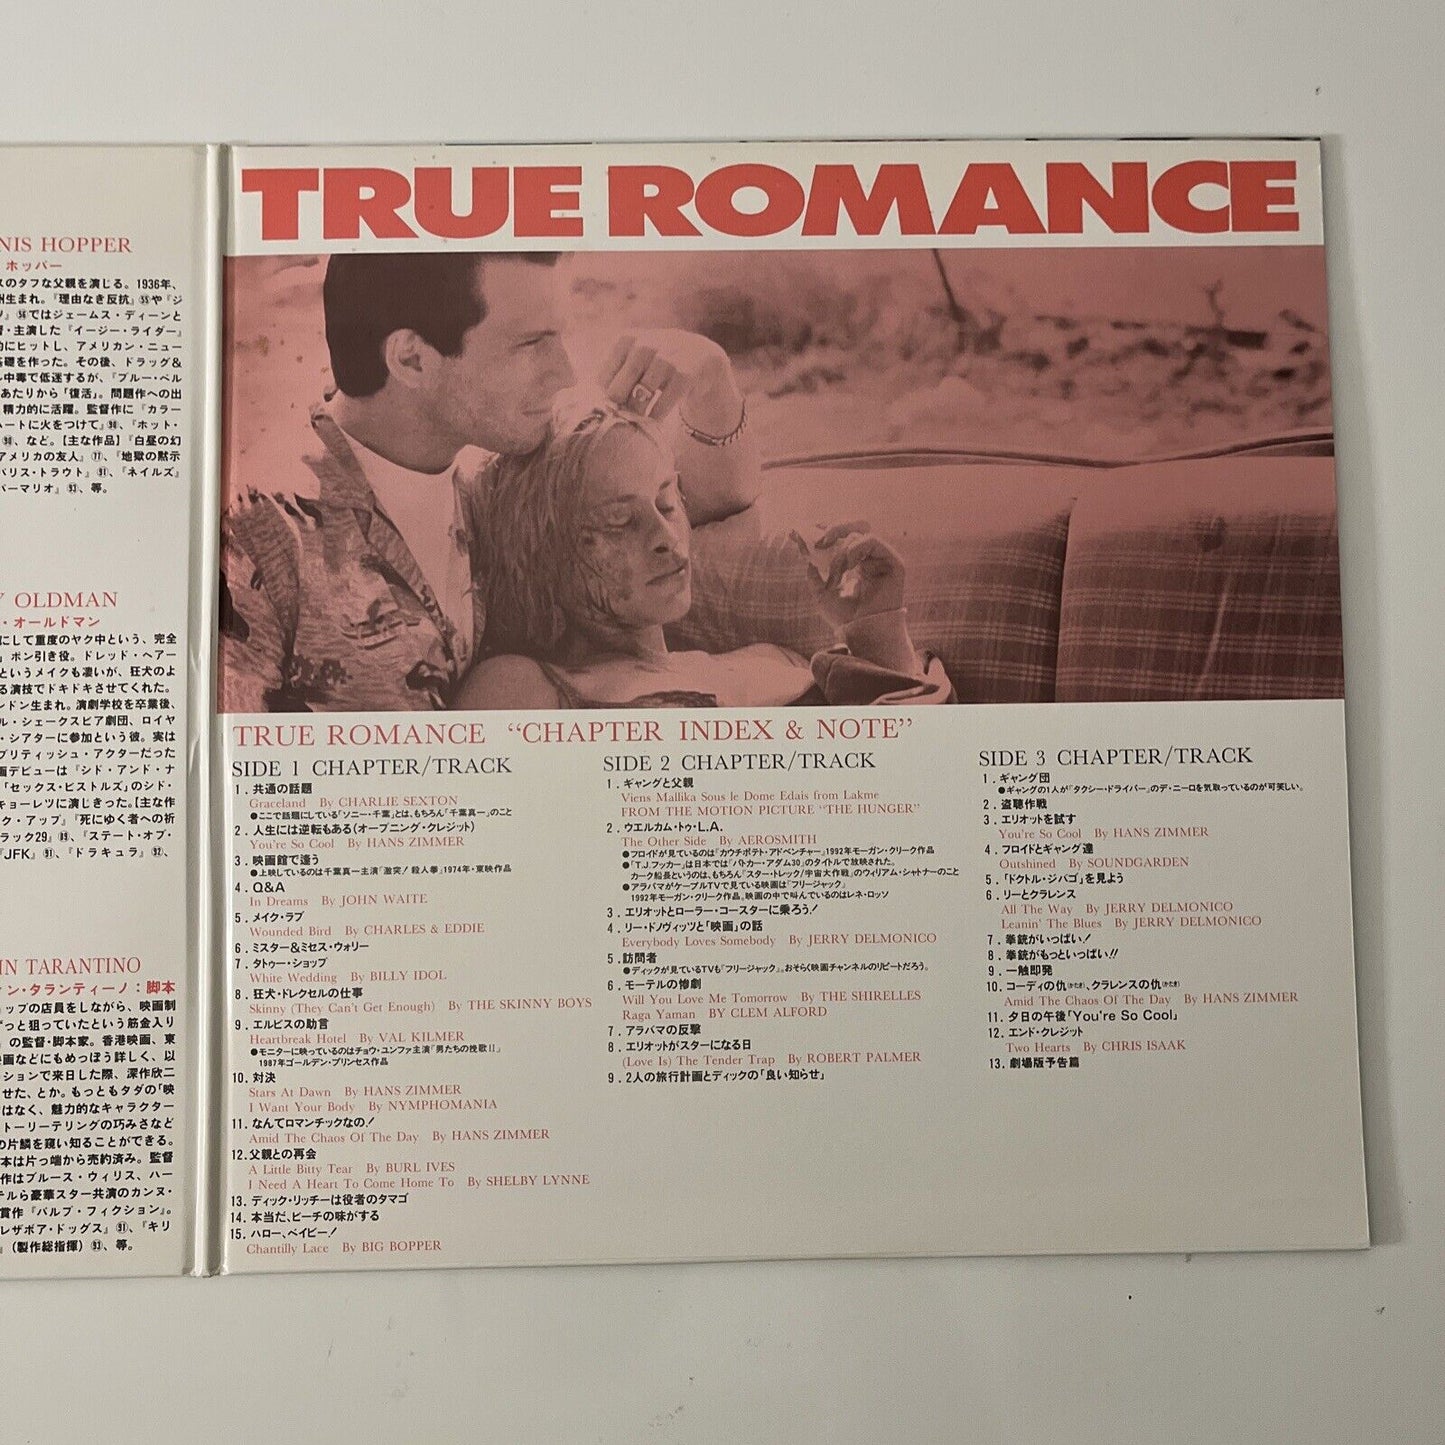 True Romance - LaserDisc (LD, 1993) Christian Slater  Gatefold with Obi